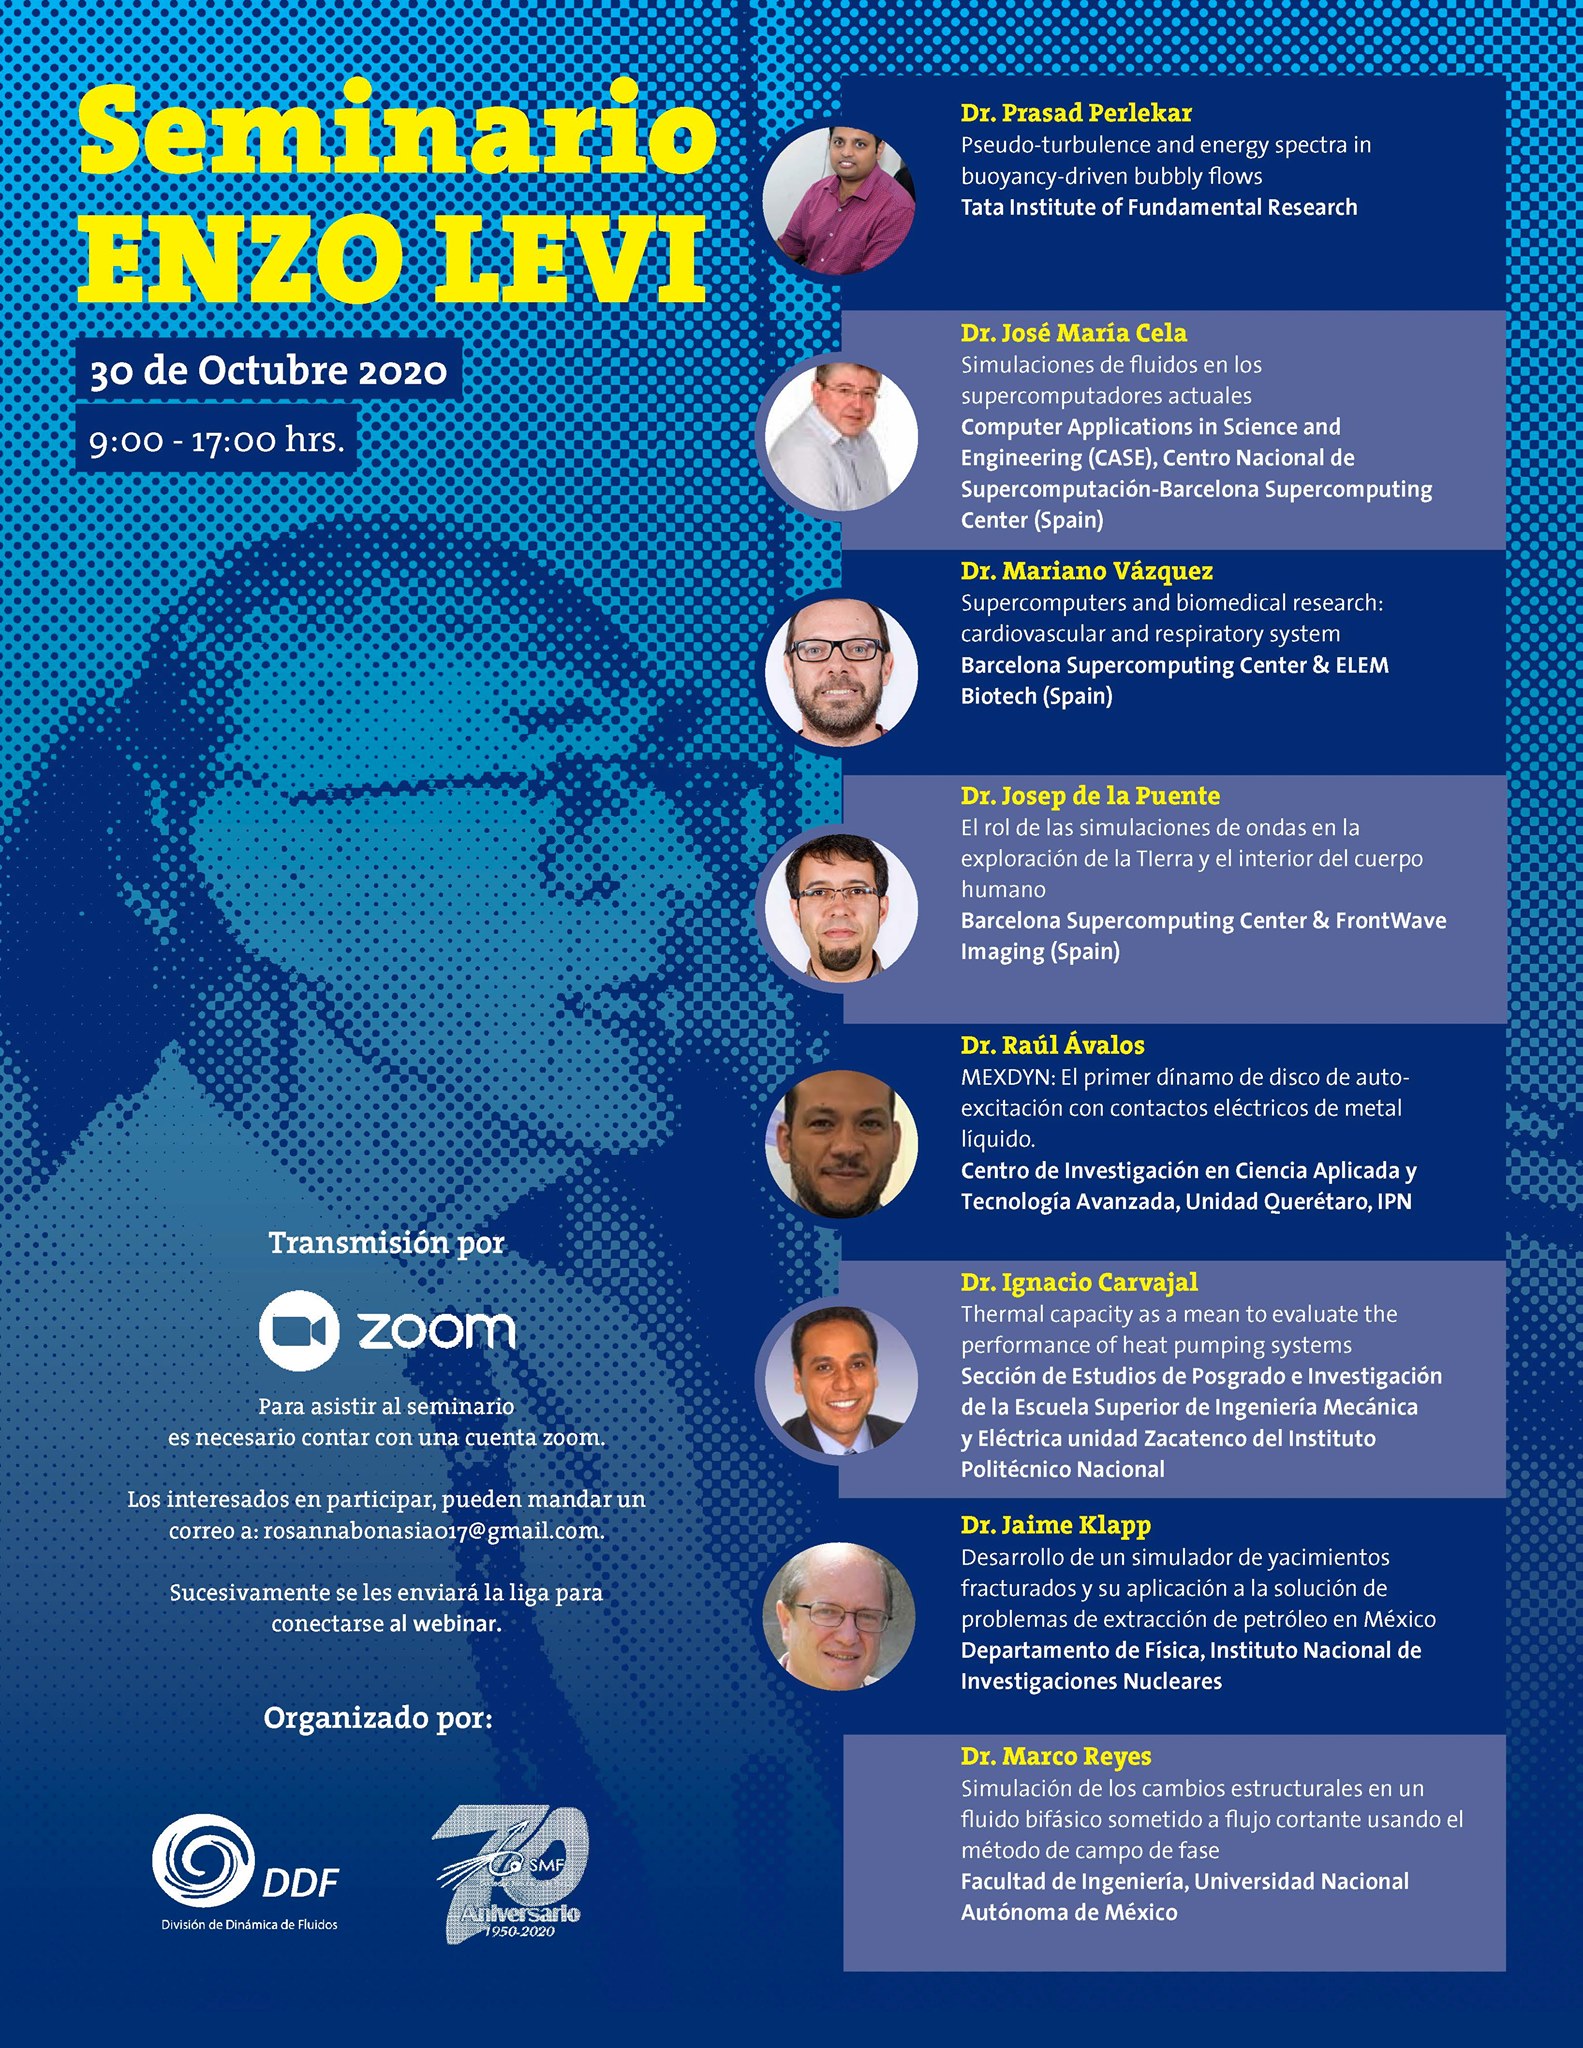 Enzo Levi Seminar